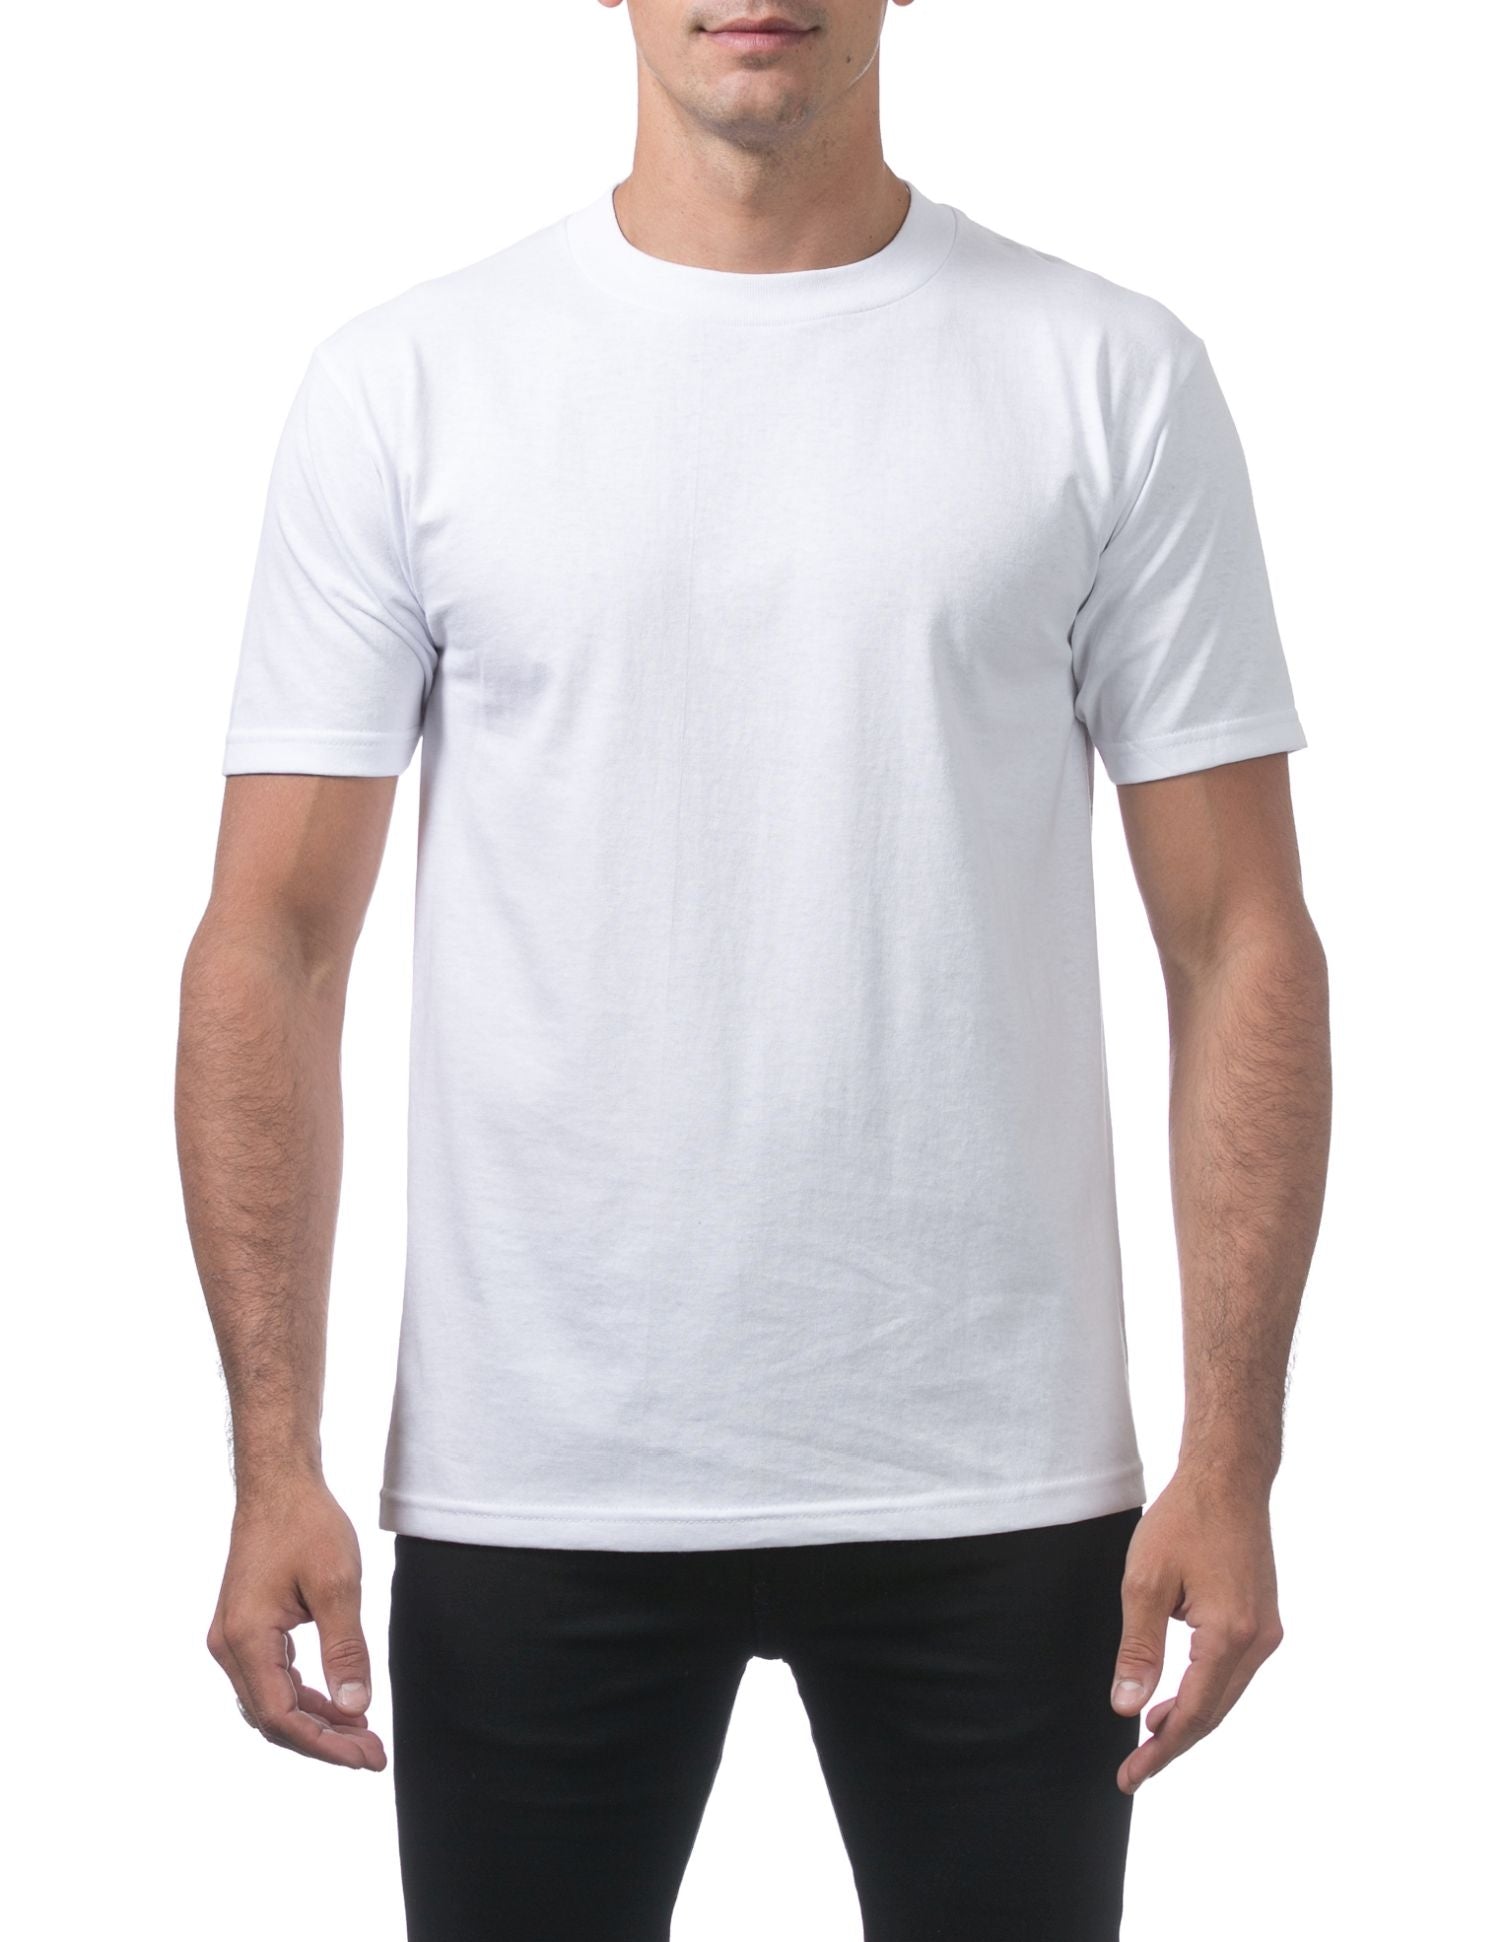 Pro Club Men's Comfort Cotton Short Sleeve T-Shirt - White - Large - Pro-Distributing